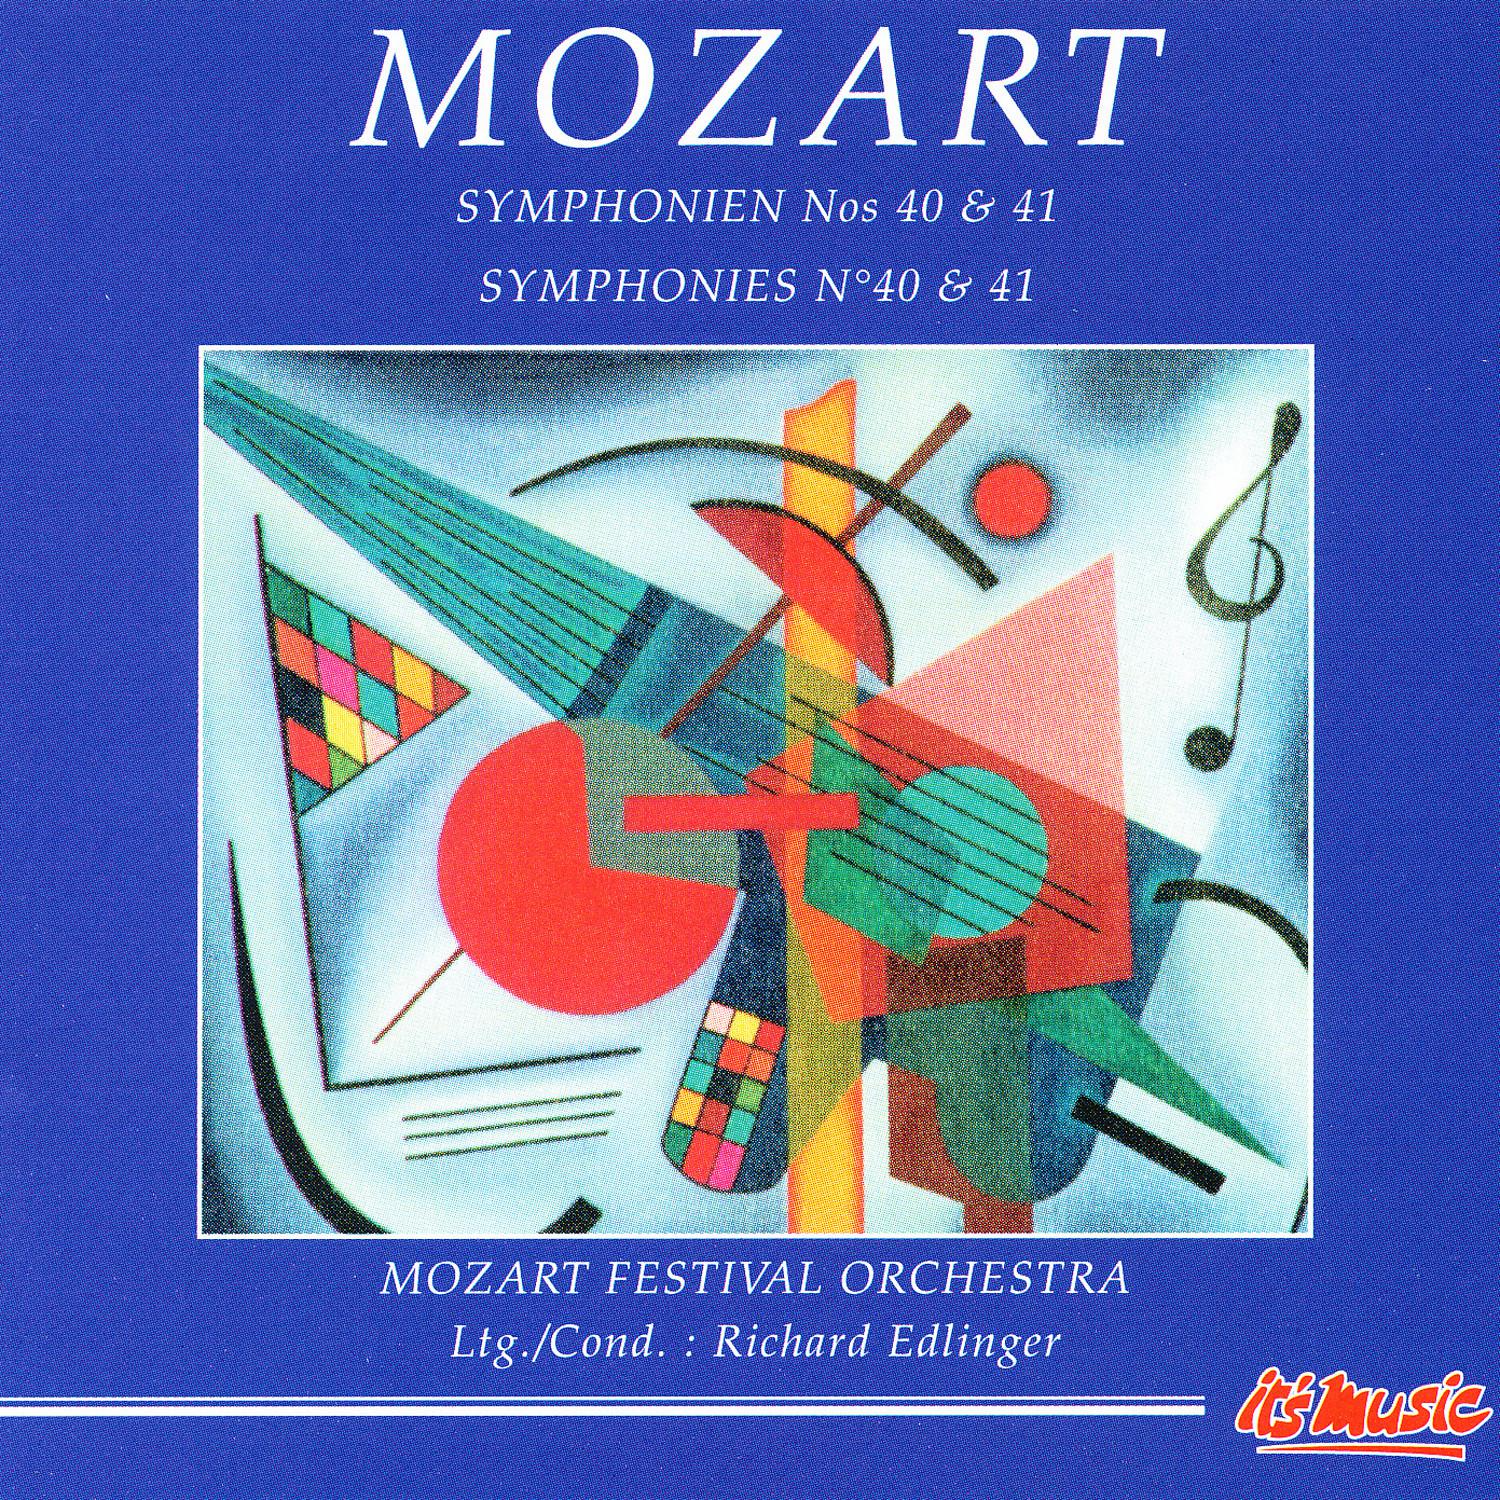 Symphonie No 40 KV 550 G-Moll; Menuett: Allegroetto